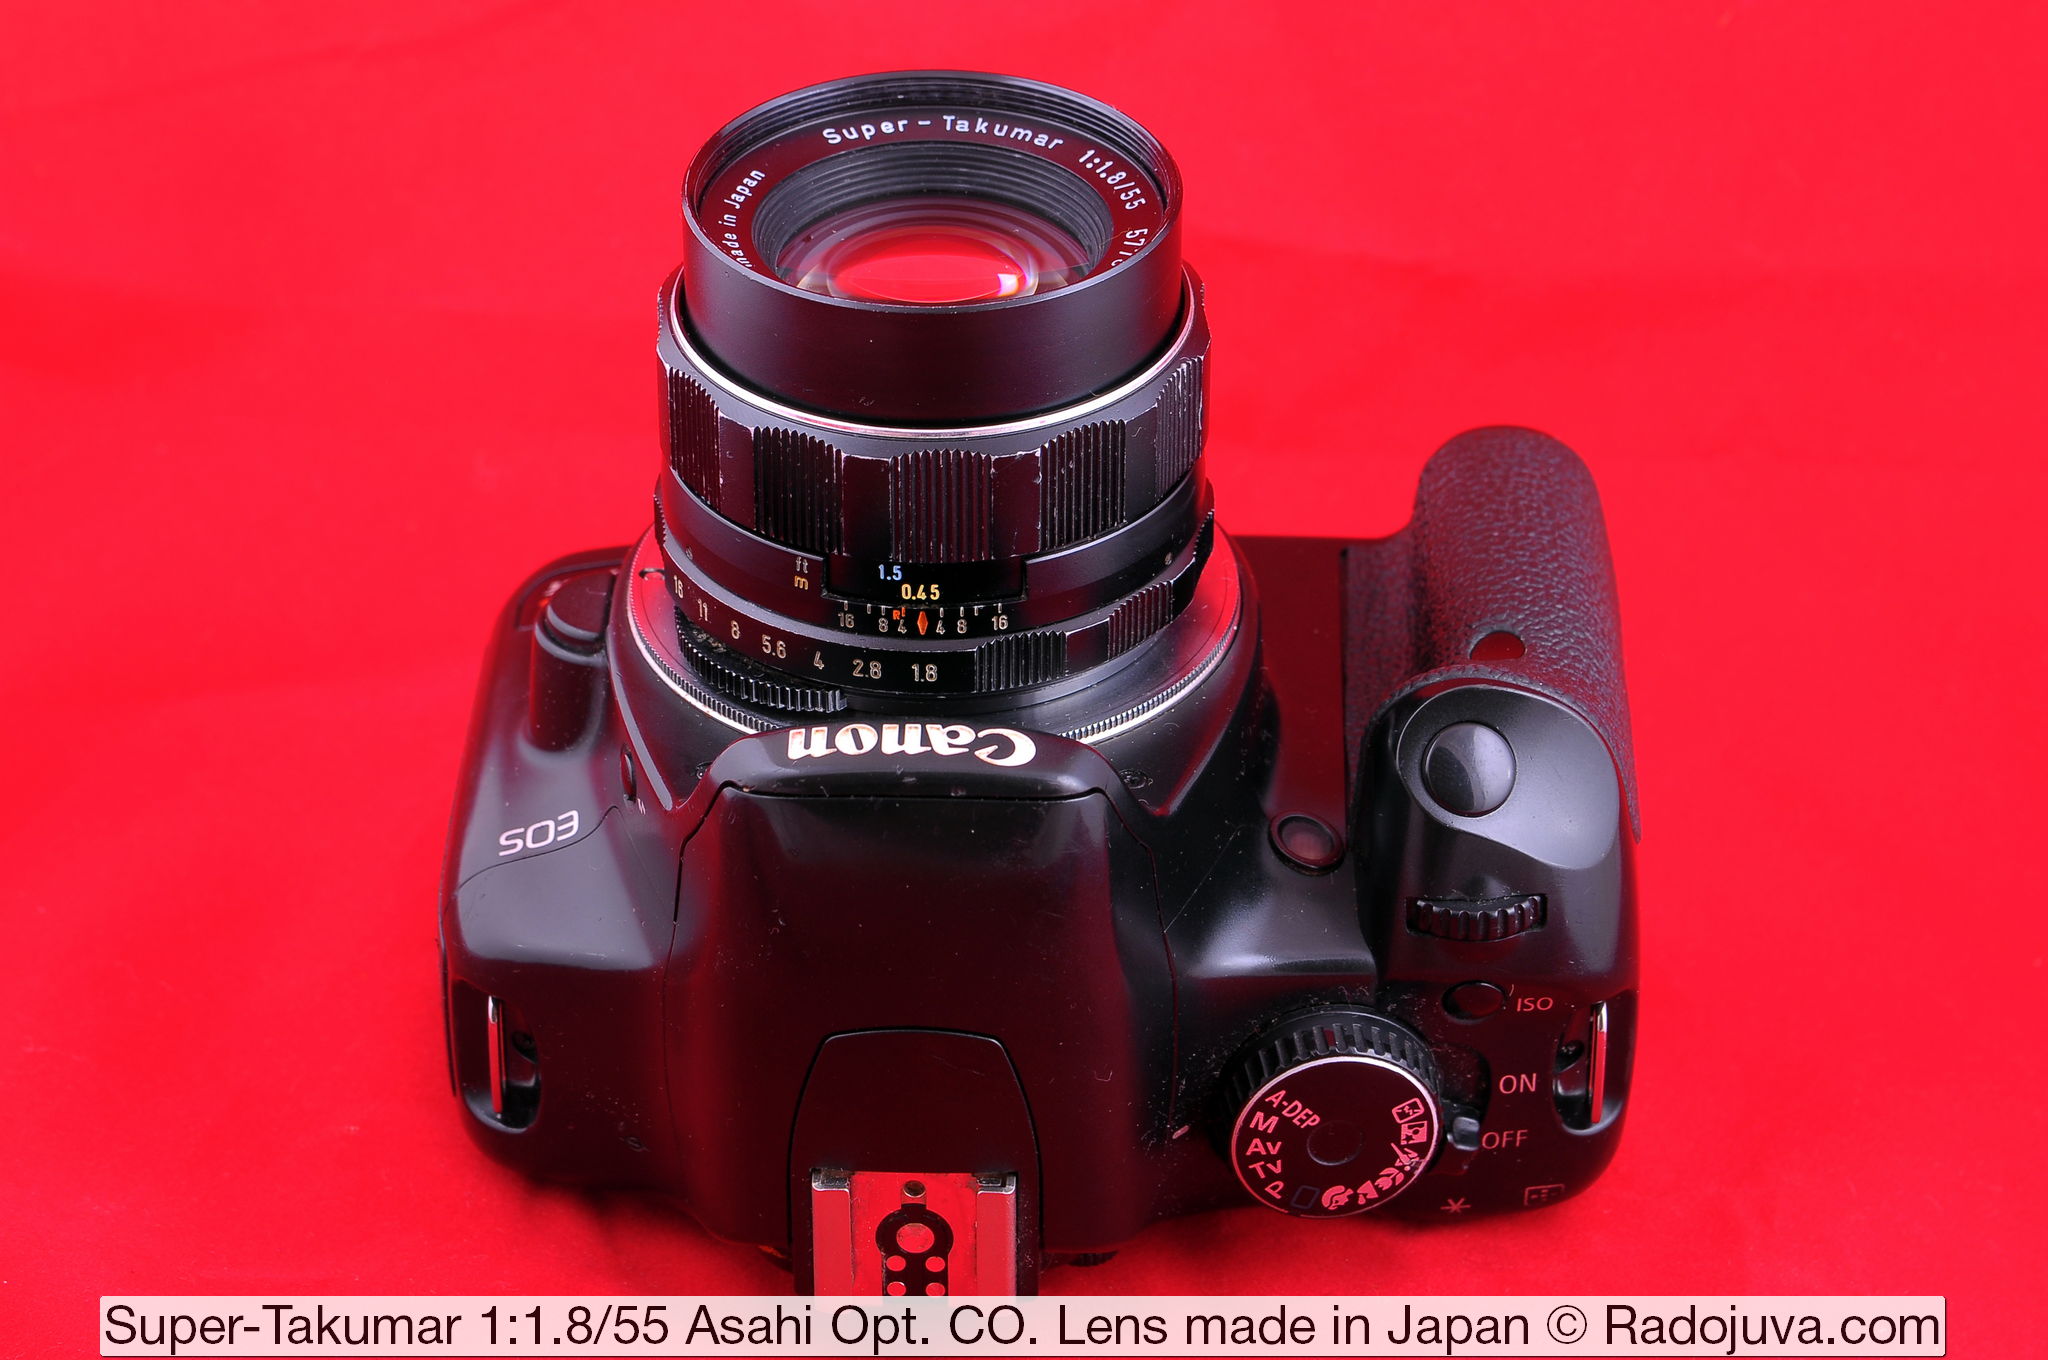 Super-Takumar 1:1.8/55 Asahi Opt. Co. Lens made in Japan. Объектив показан на цифровом зеркальном фотоаппарате Canon EOS DIGITAL Rebel XSi. Установка объектива на фотоаппарат осуществлена с помощью переходника M42-Canon EOS с чипом. 